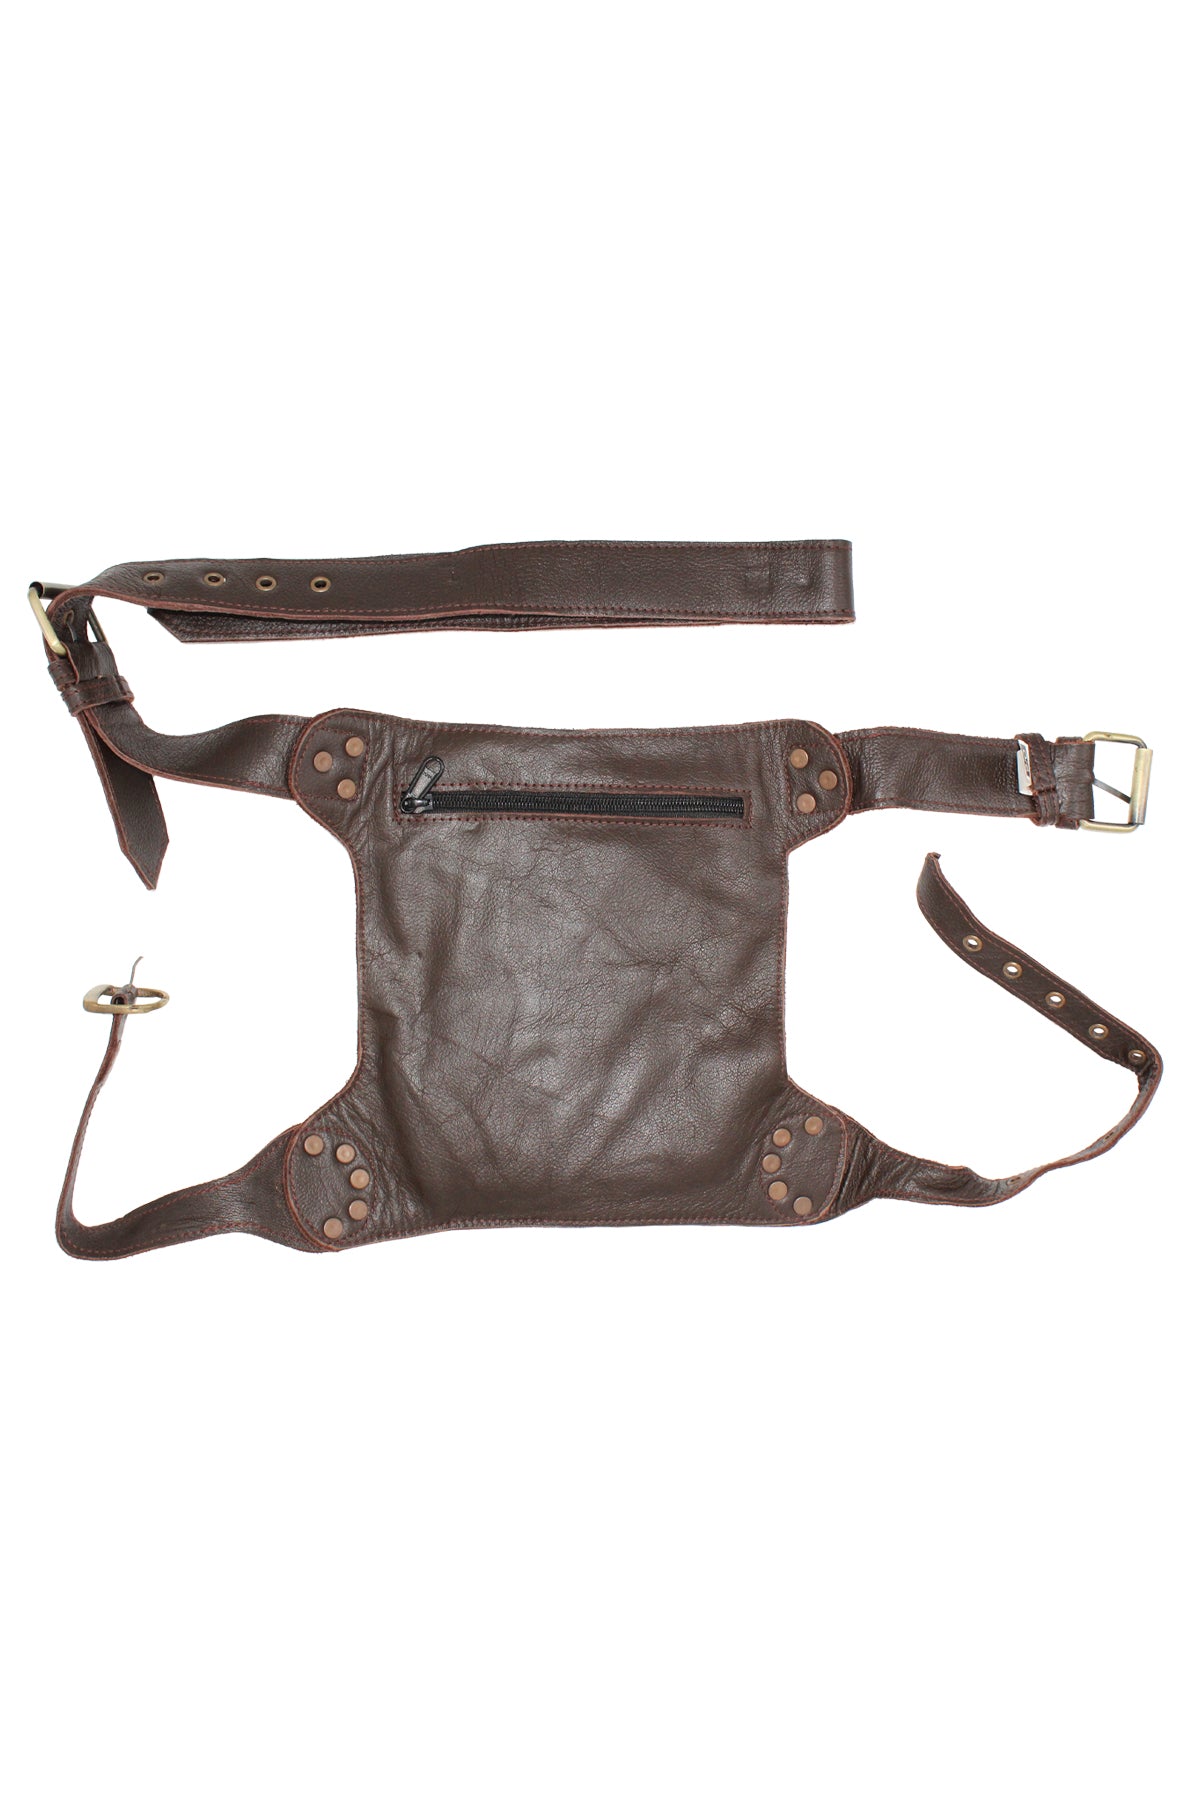 Holster Style Rustic Belt Bag